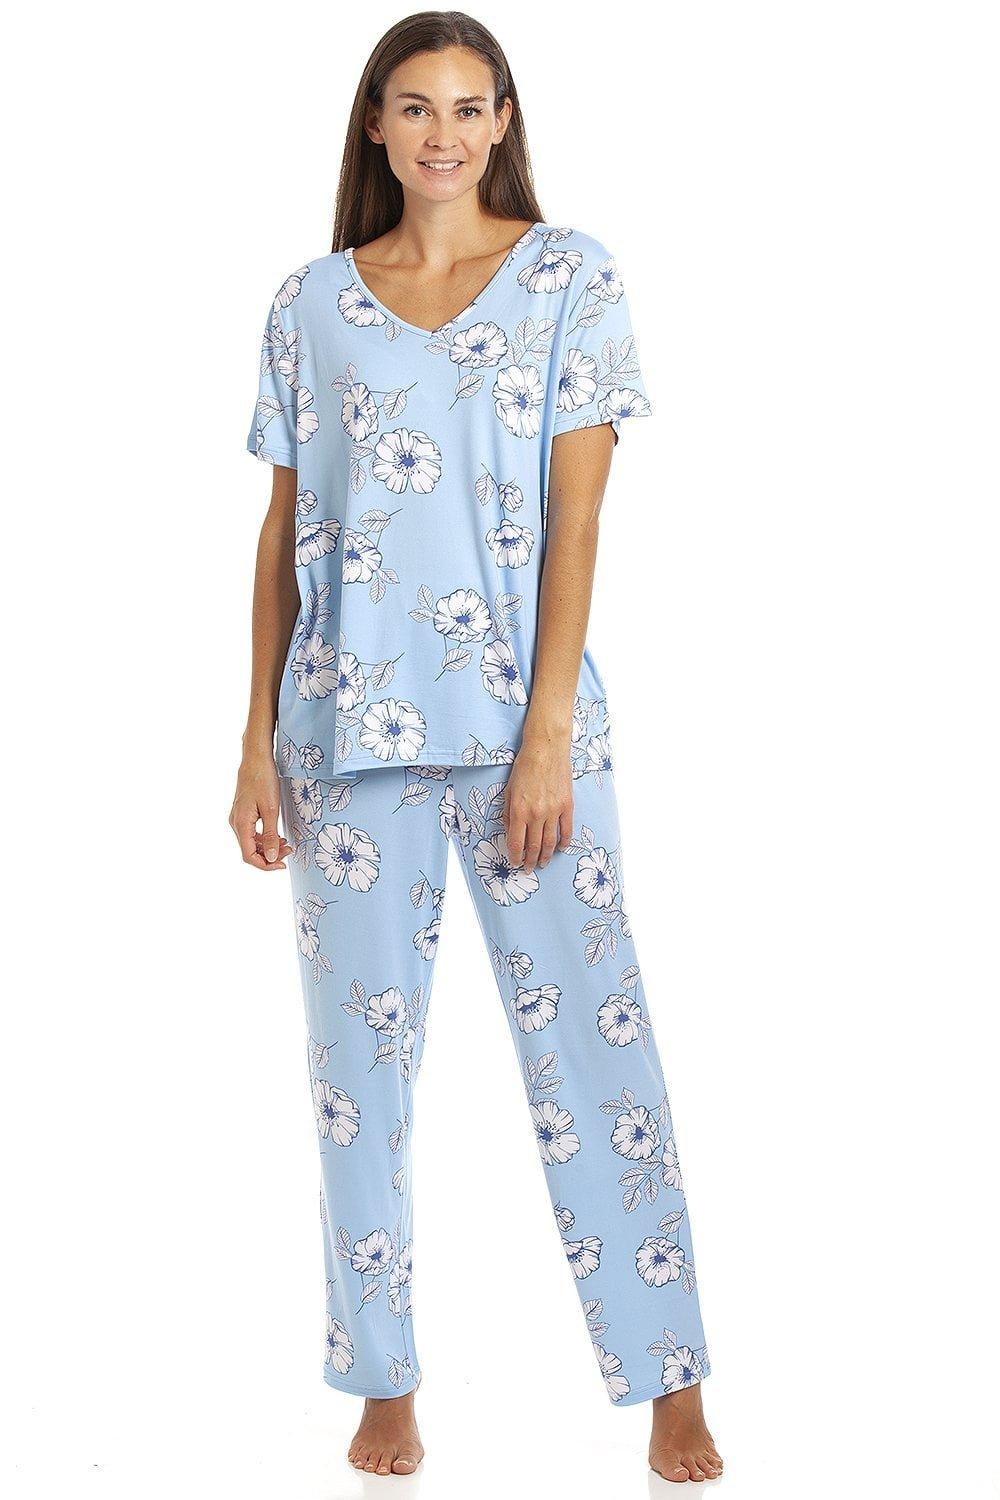 Spandex Full Length Pyjama Set